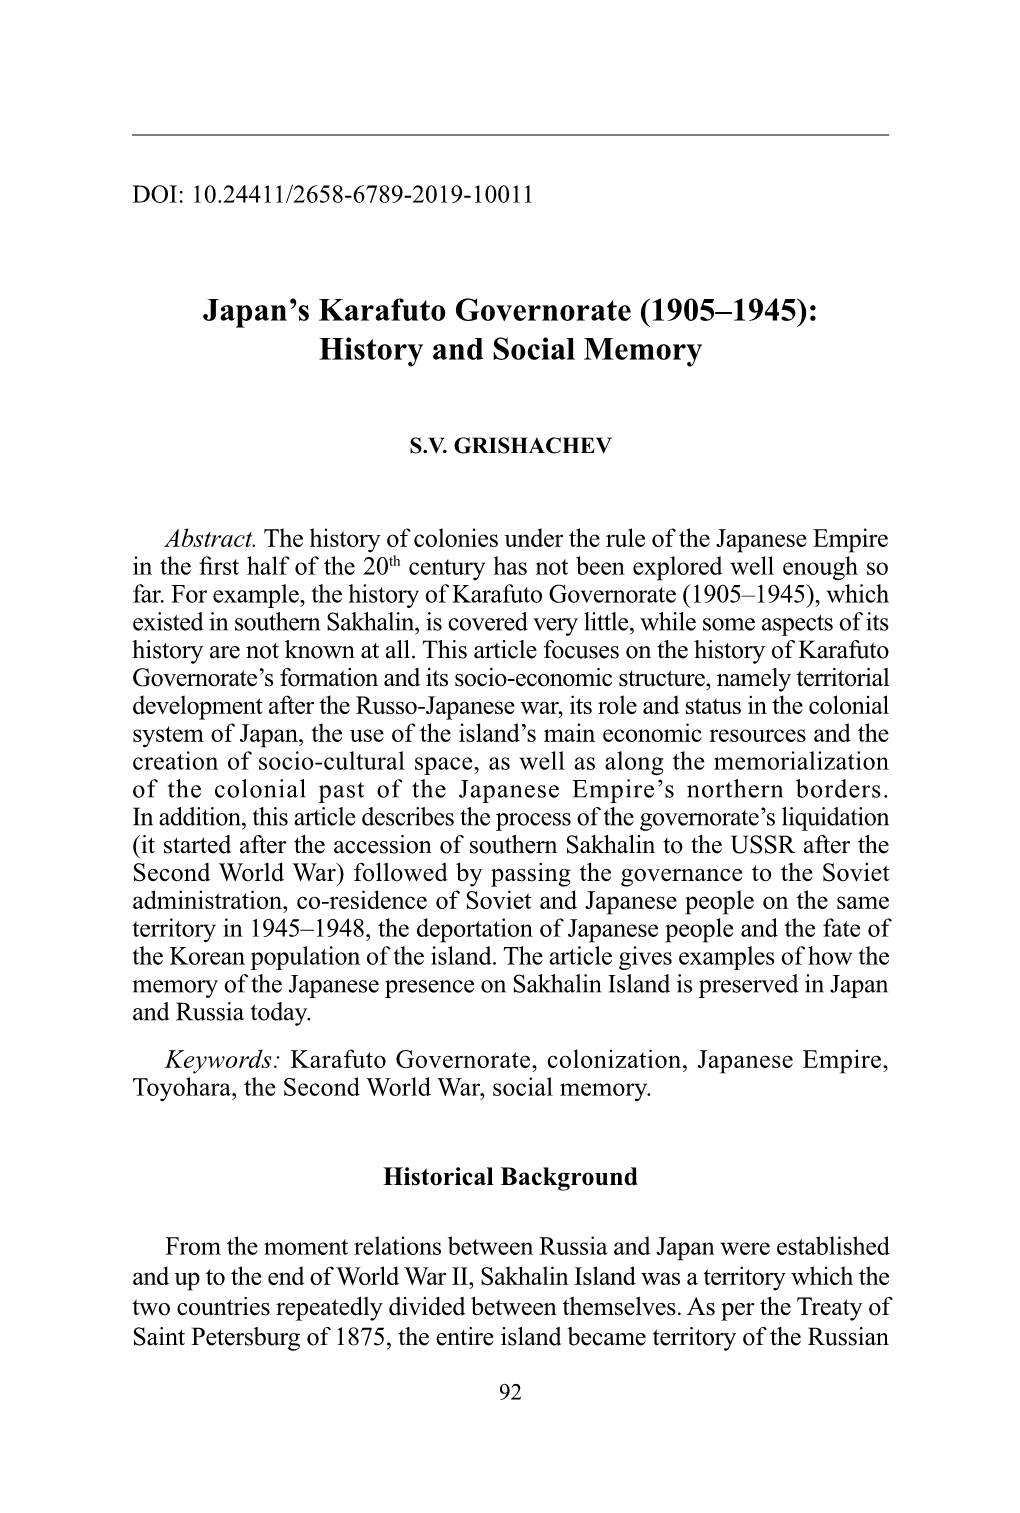 Japan's Karafuto Governorate (1905–1945): History and Social Memory